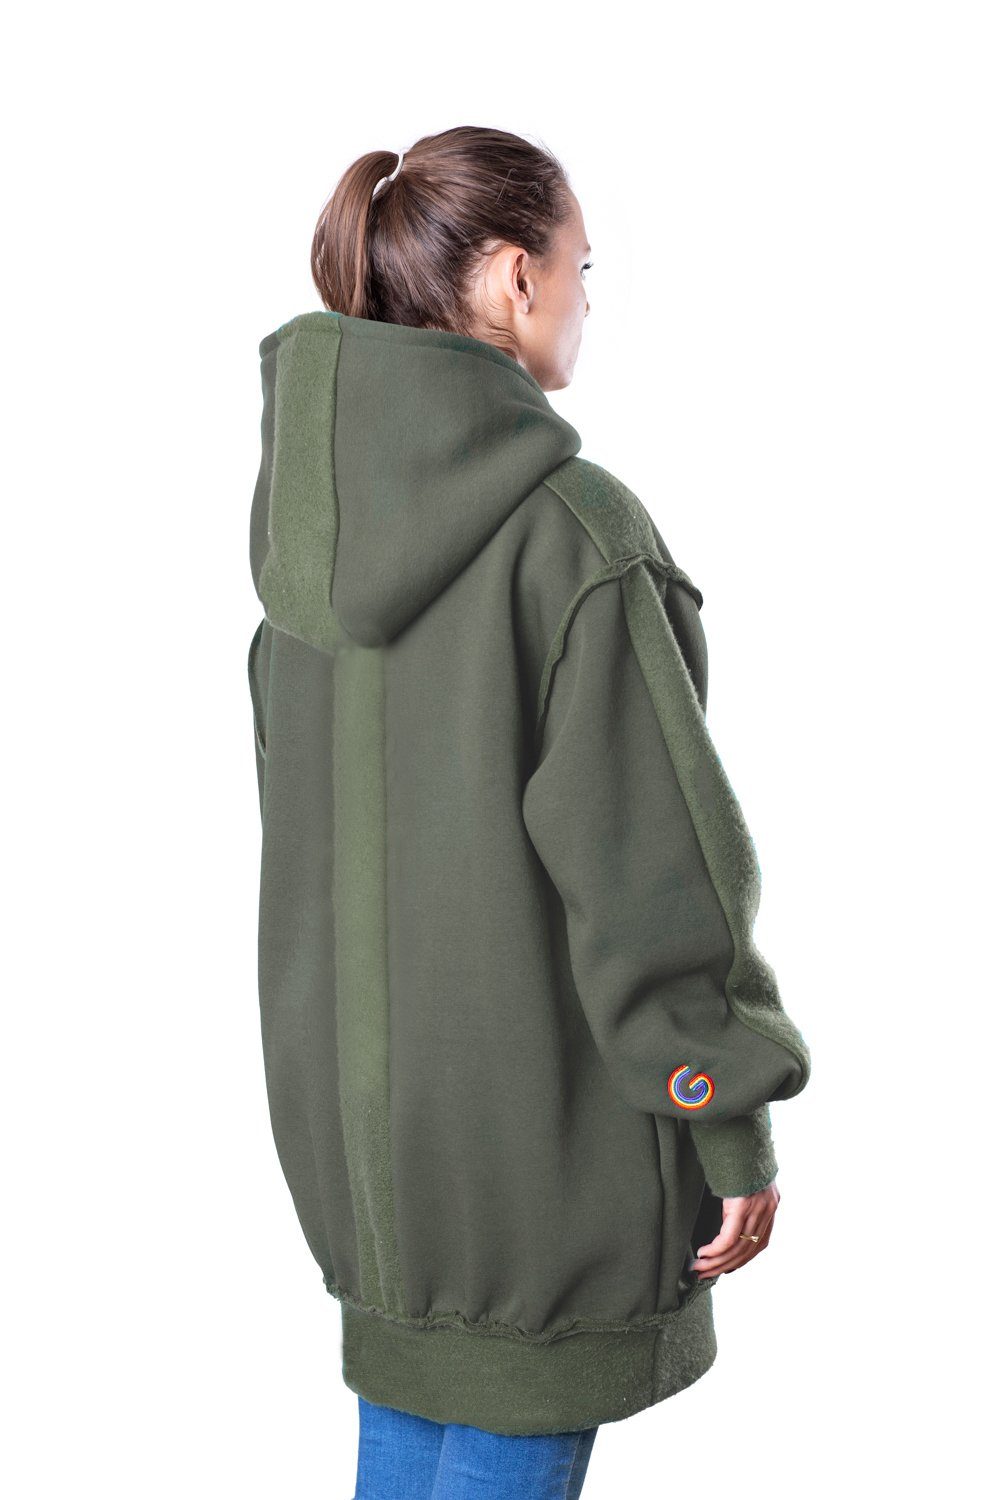 TheG Fresh Oversize Hoody Woman // military green